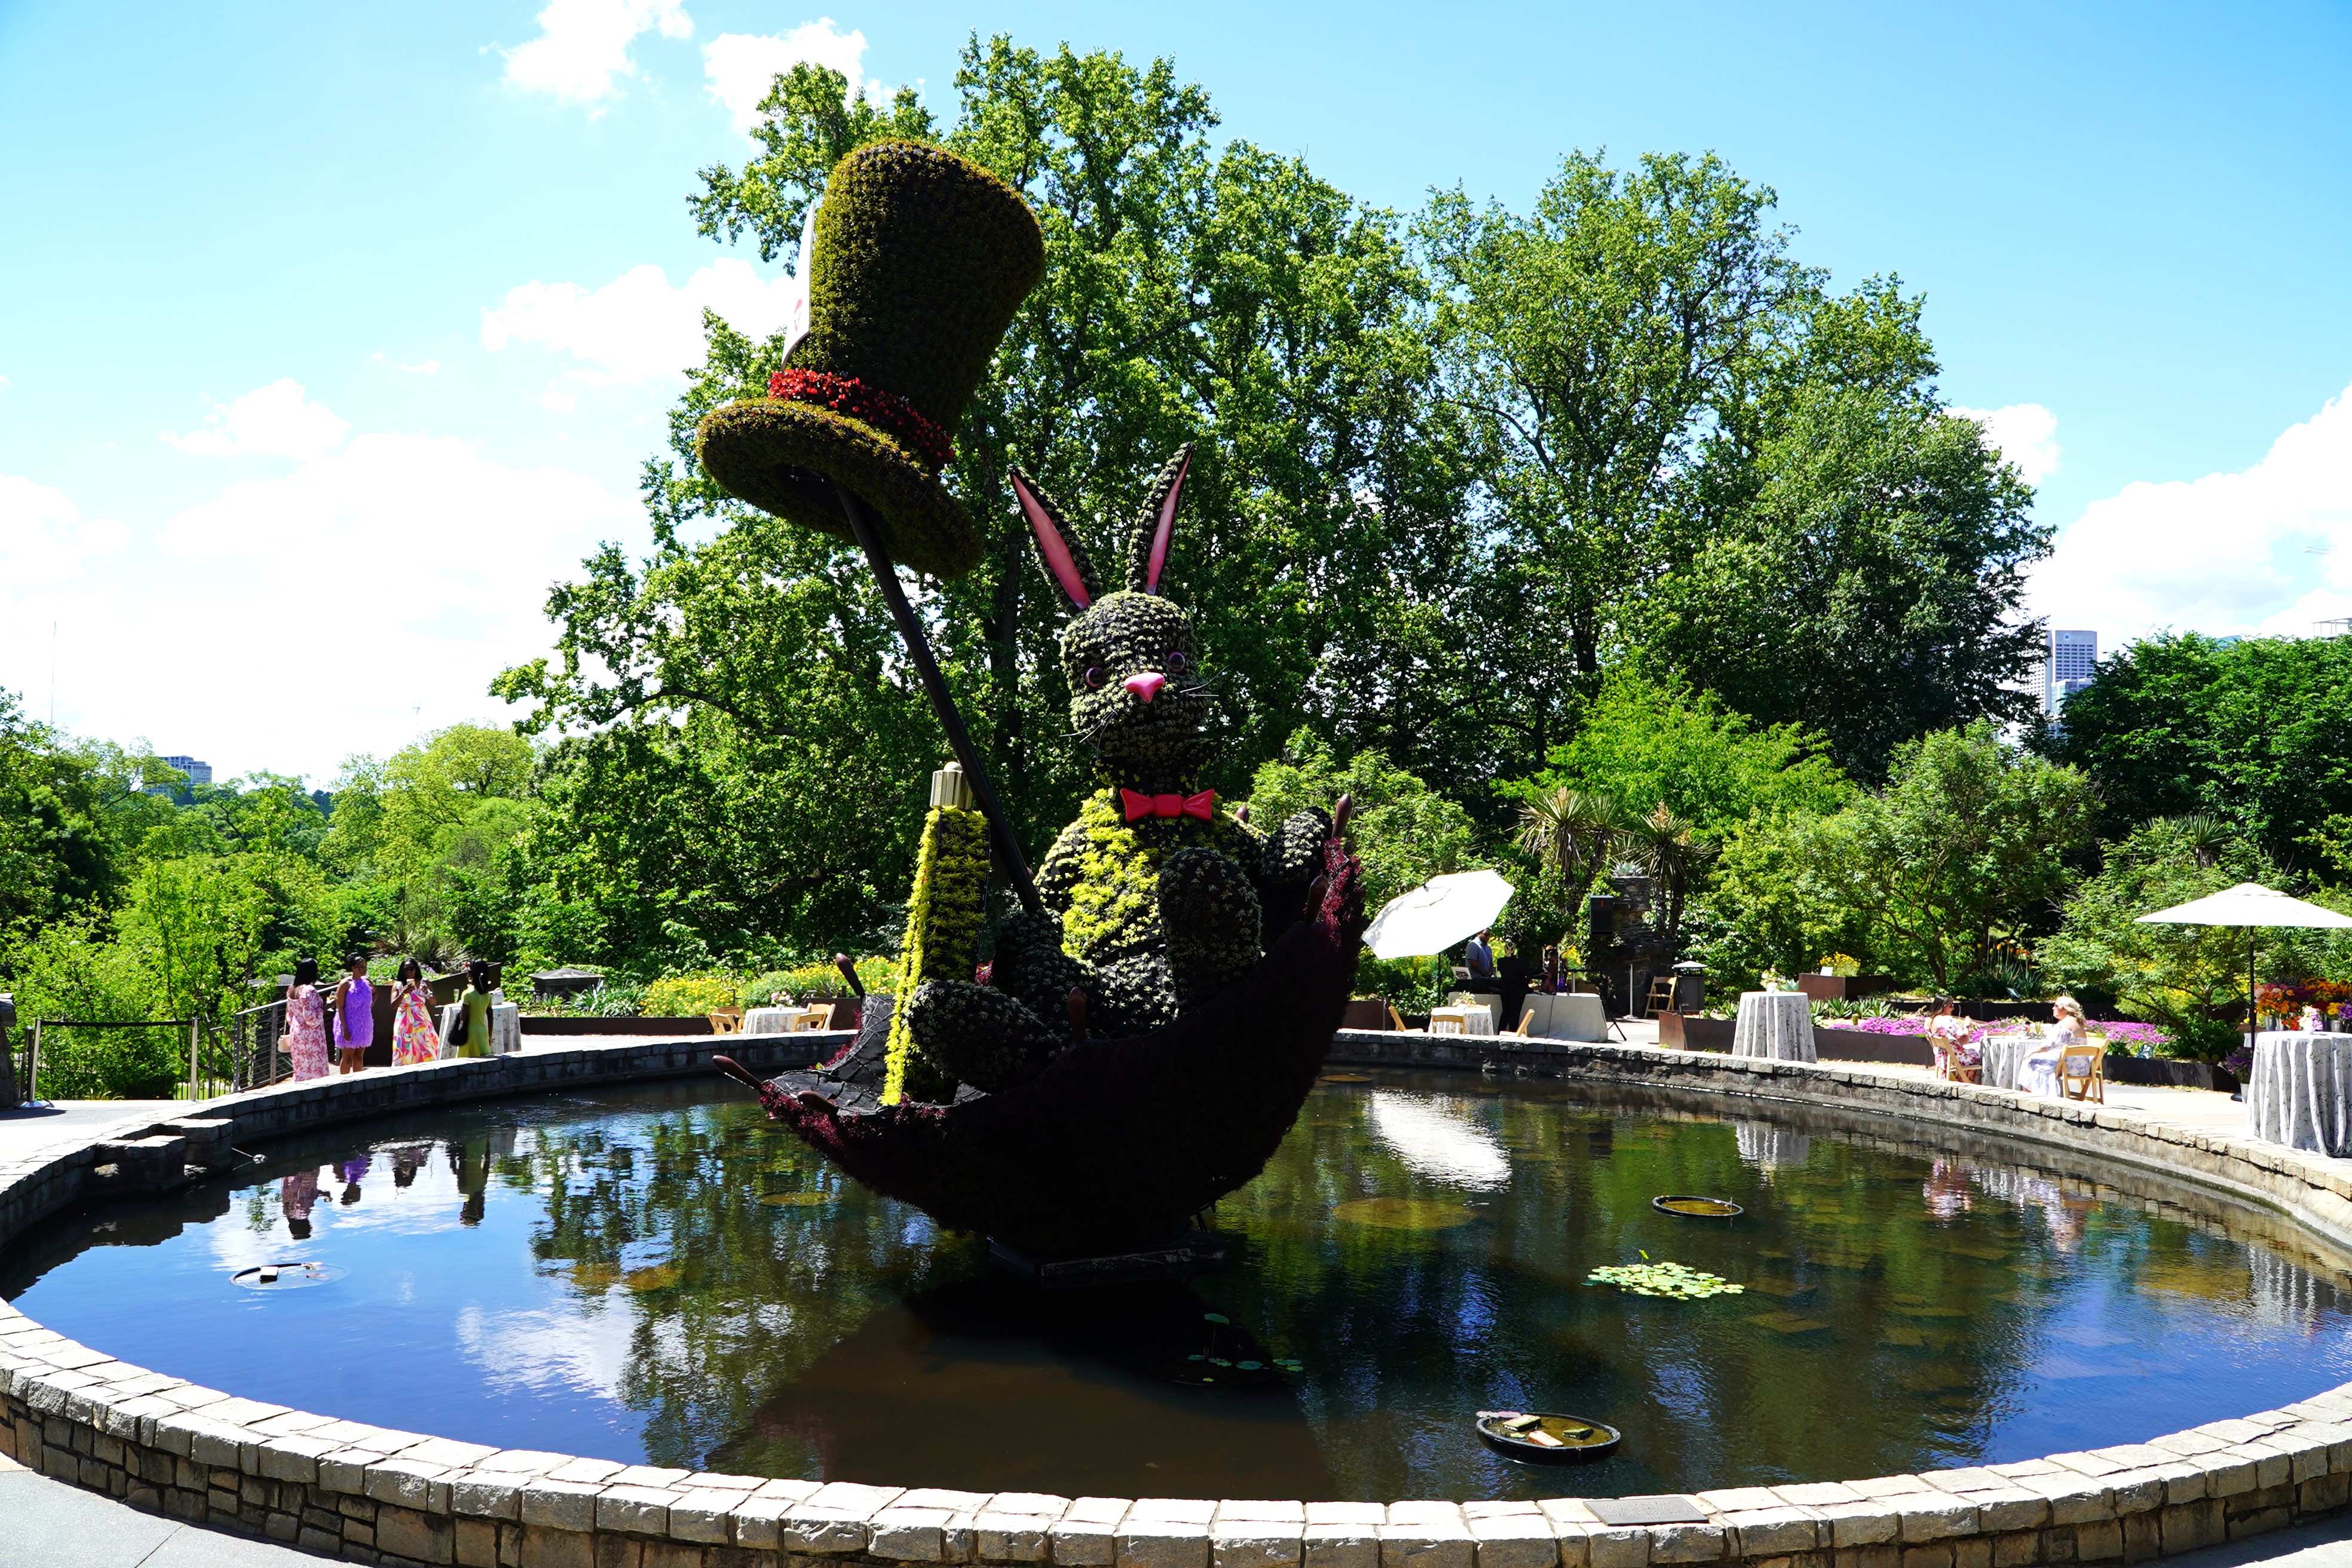 Alice in Wonderland at Atlanta Botanical Garden